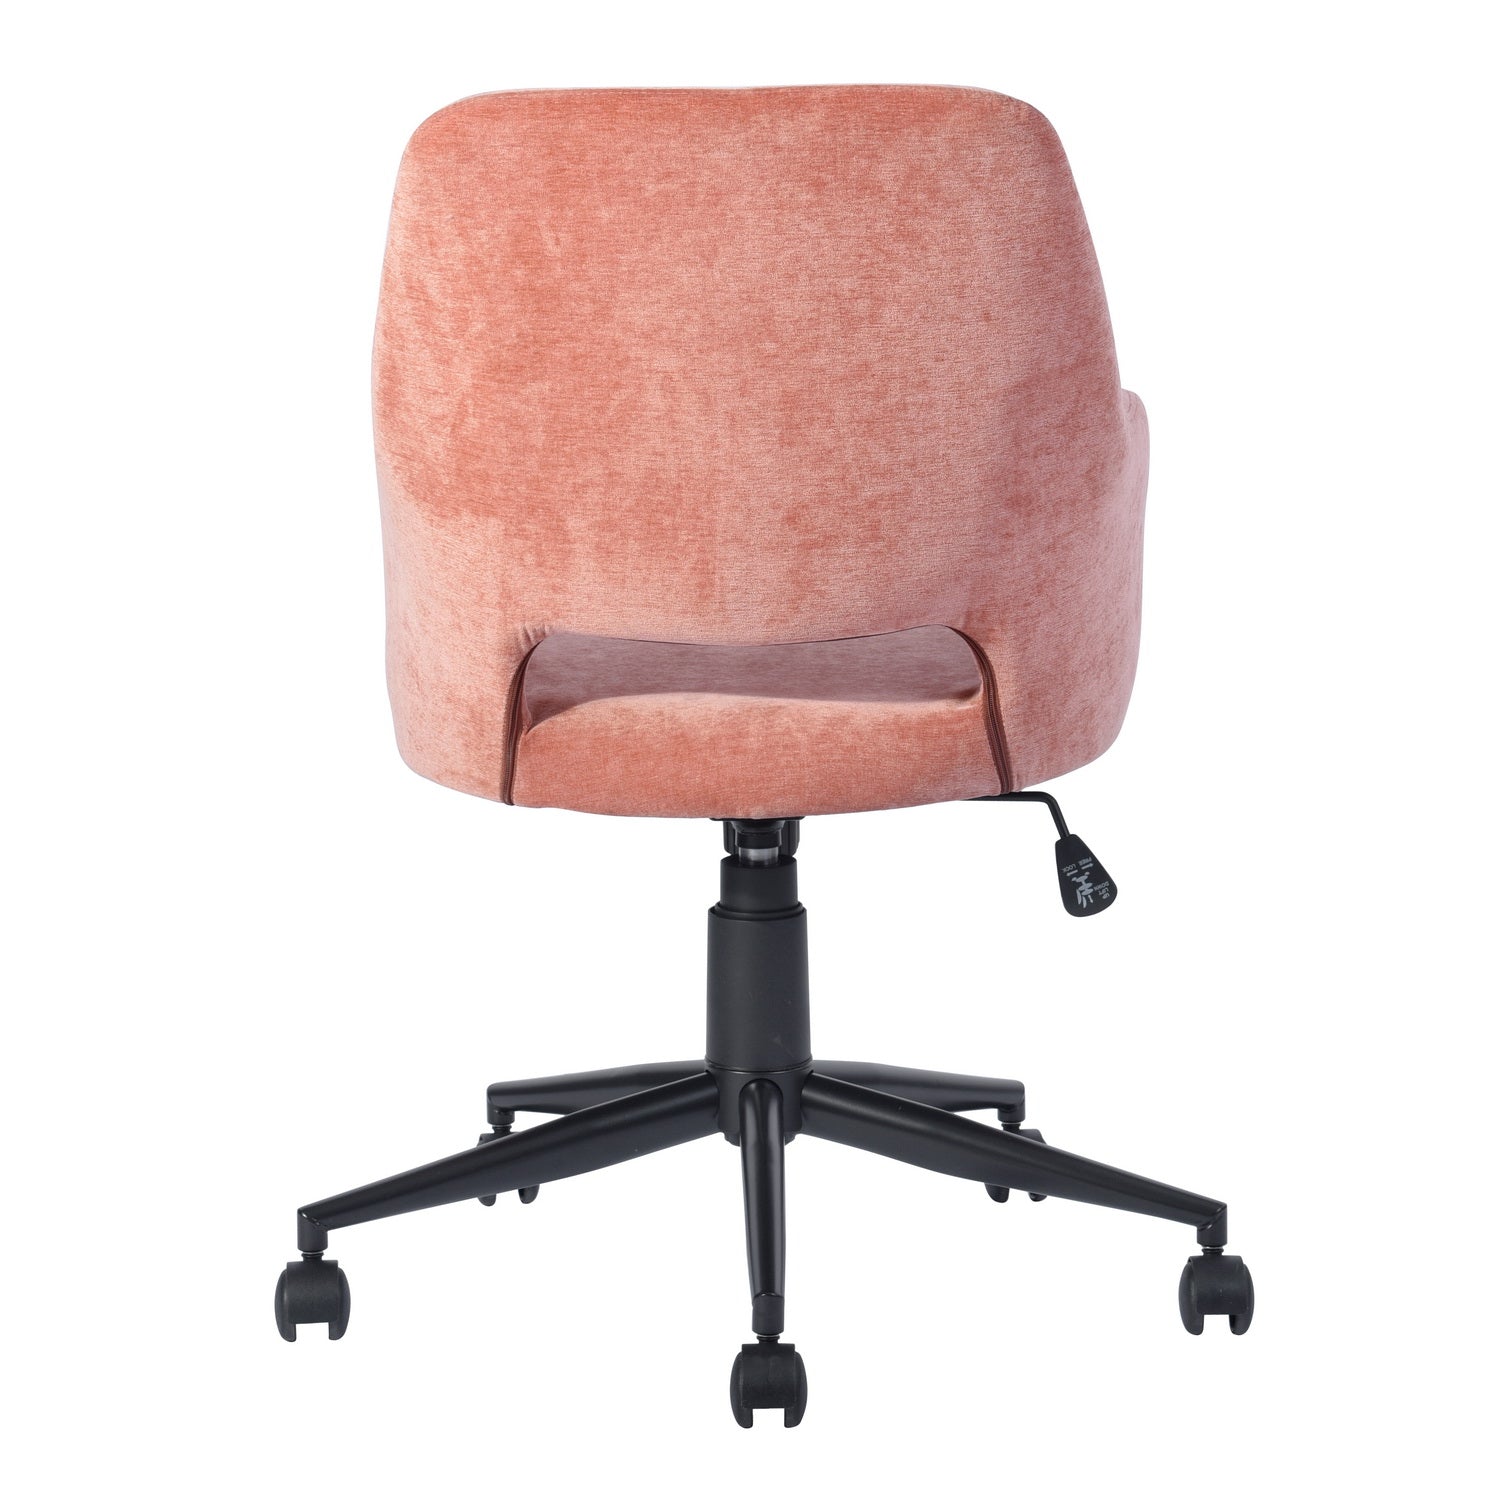 Office armchair Comfortable swivel chair Height-adjustable ergonomic seat